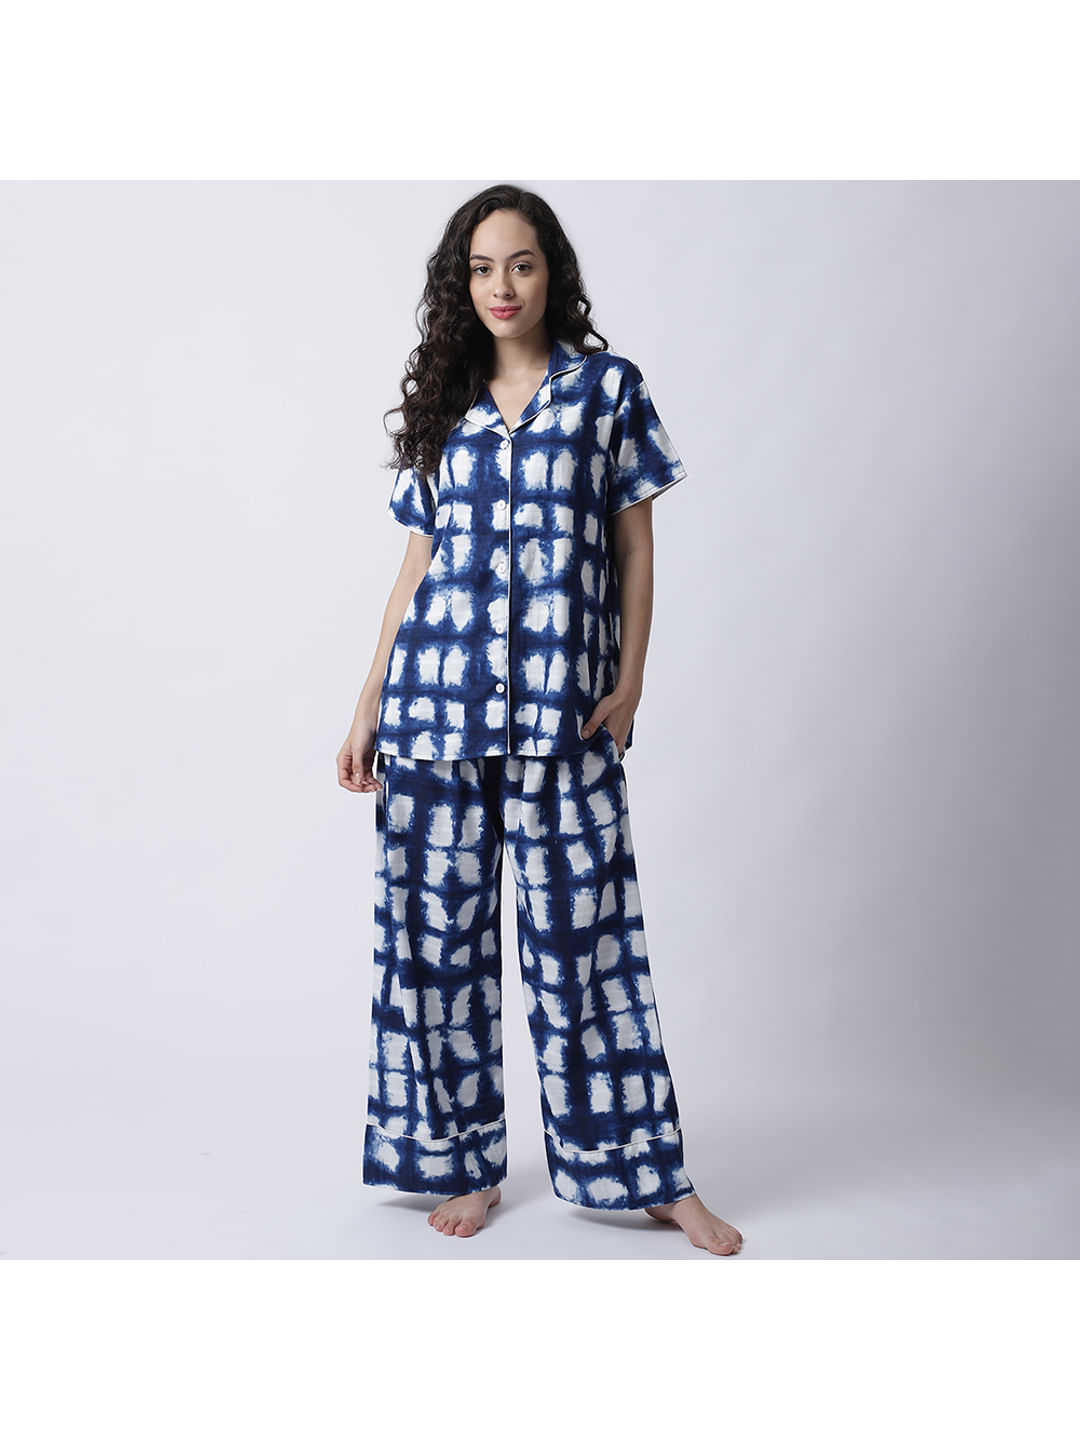 Cotton Tie-Dye Night Suit set of Shirt & Pyjama trouser